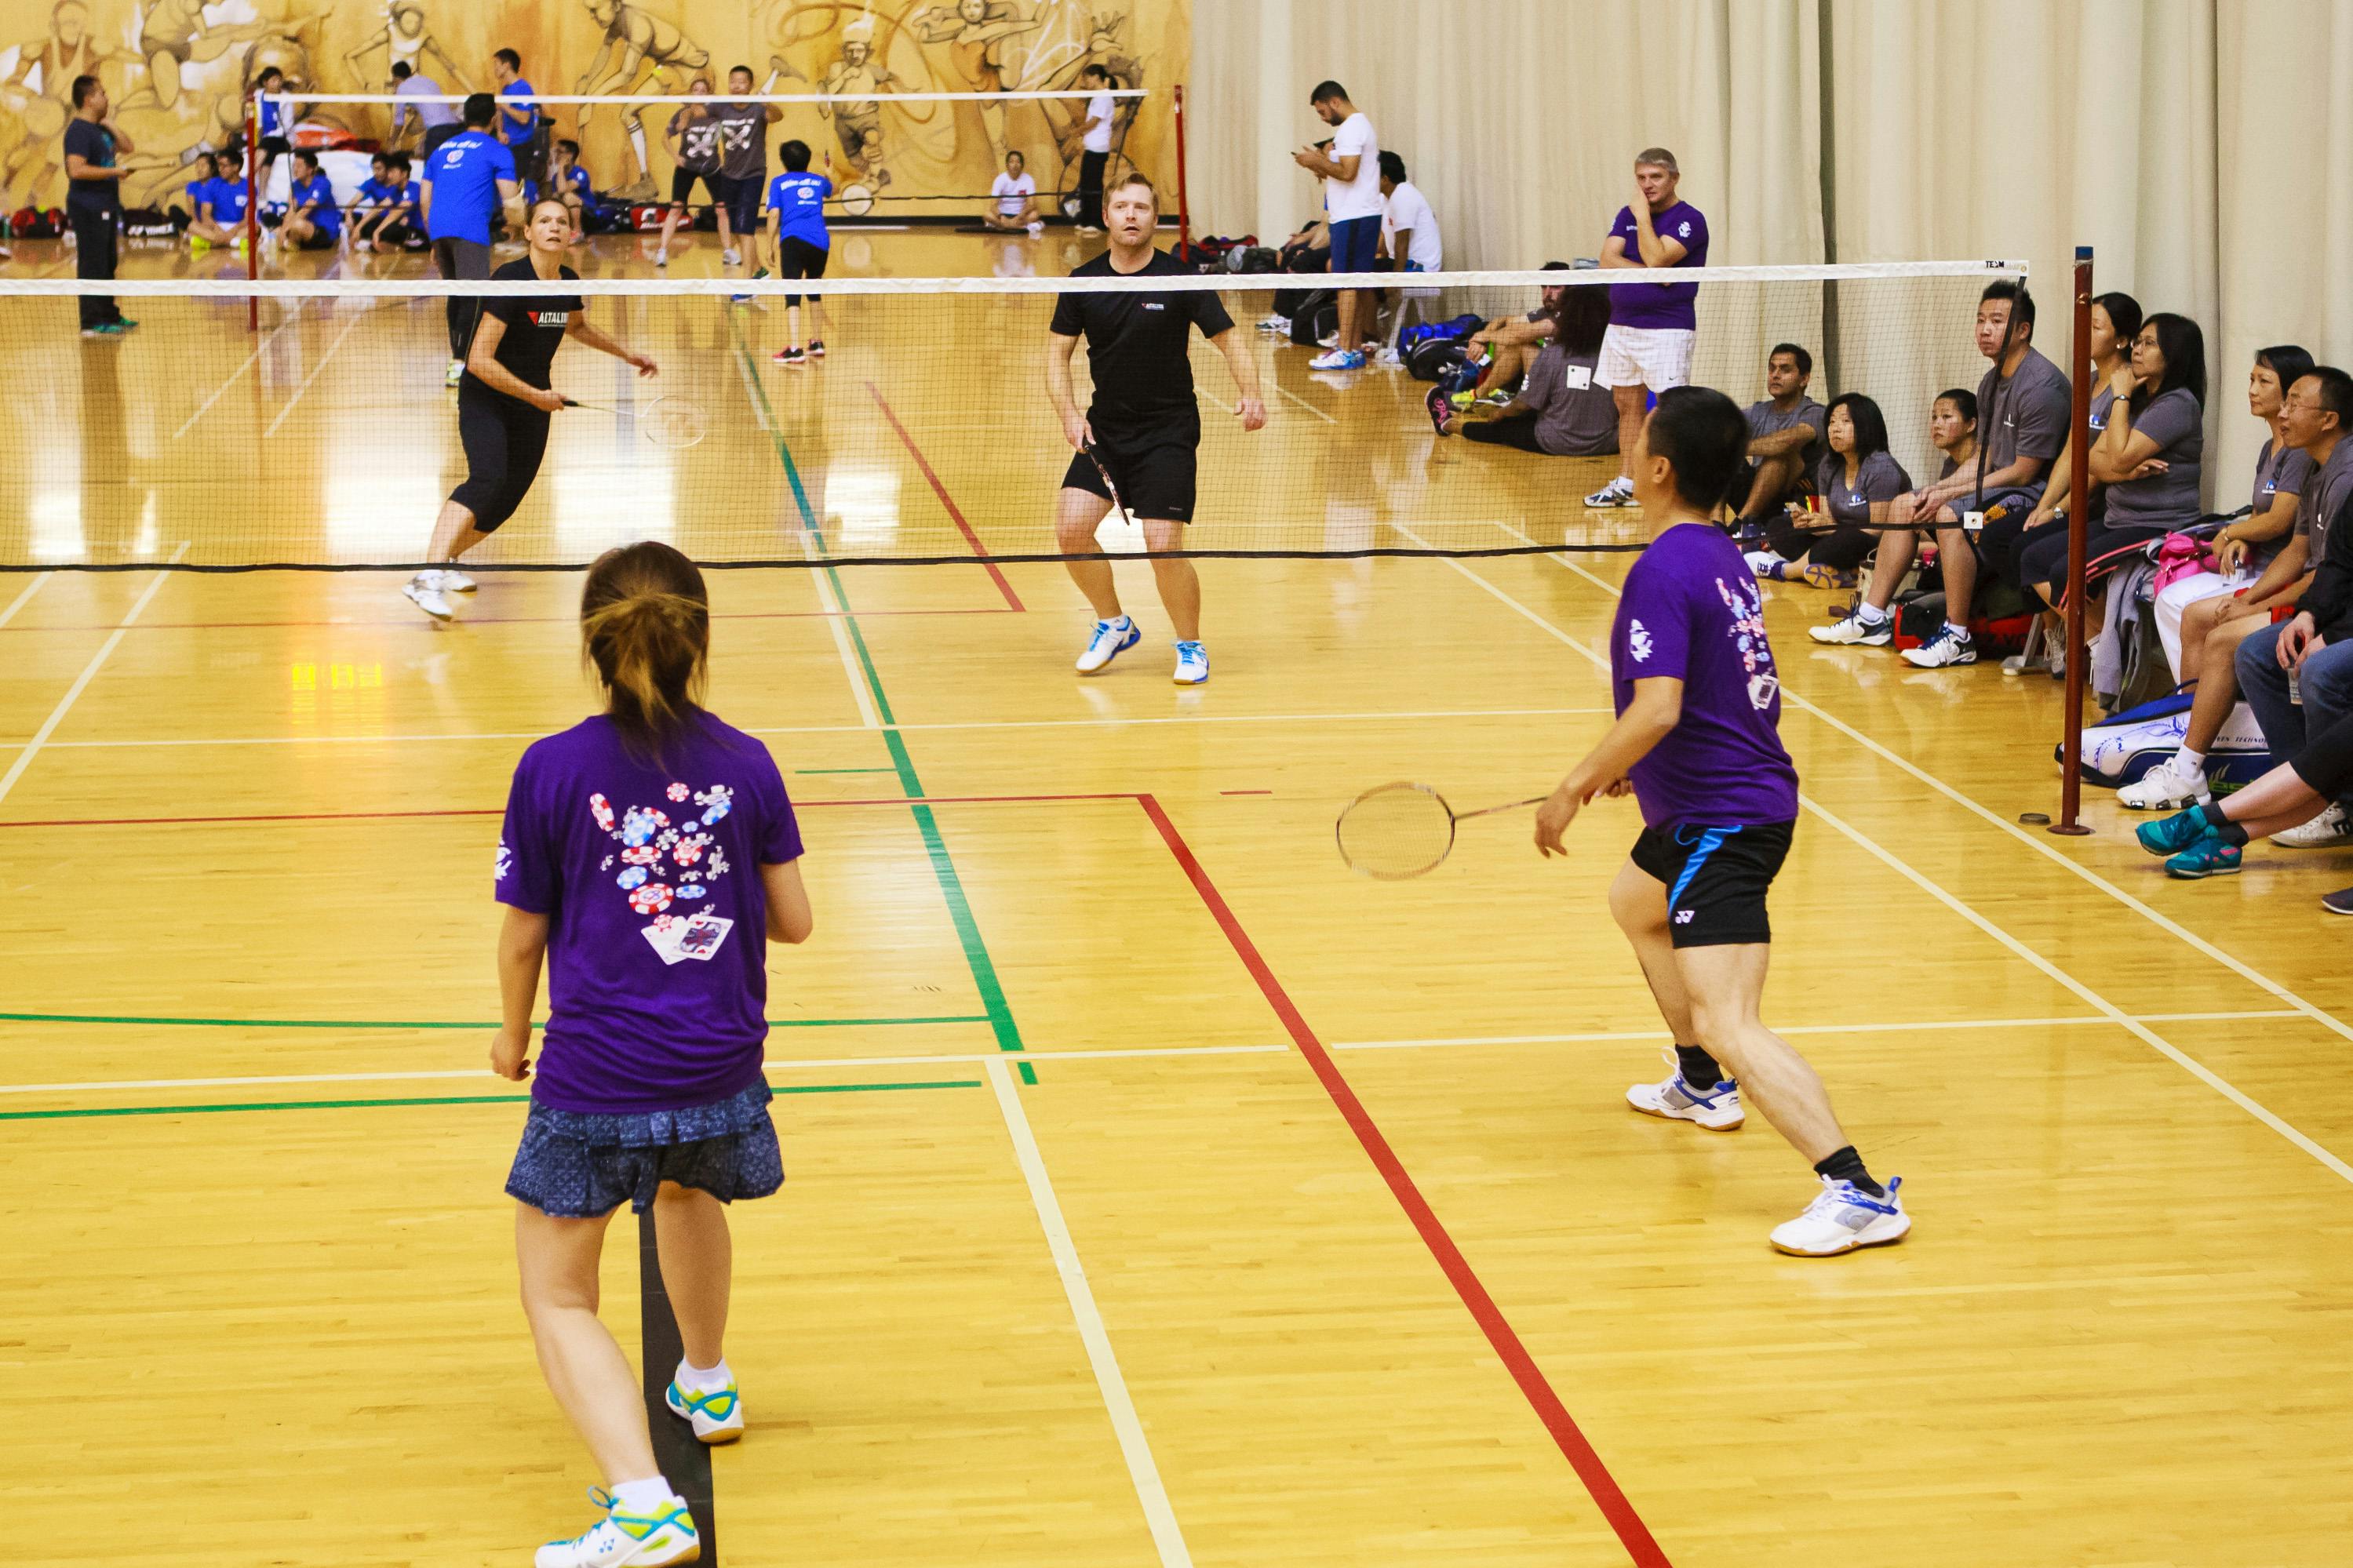 teams playing badminton